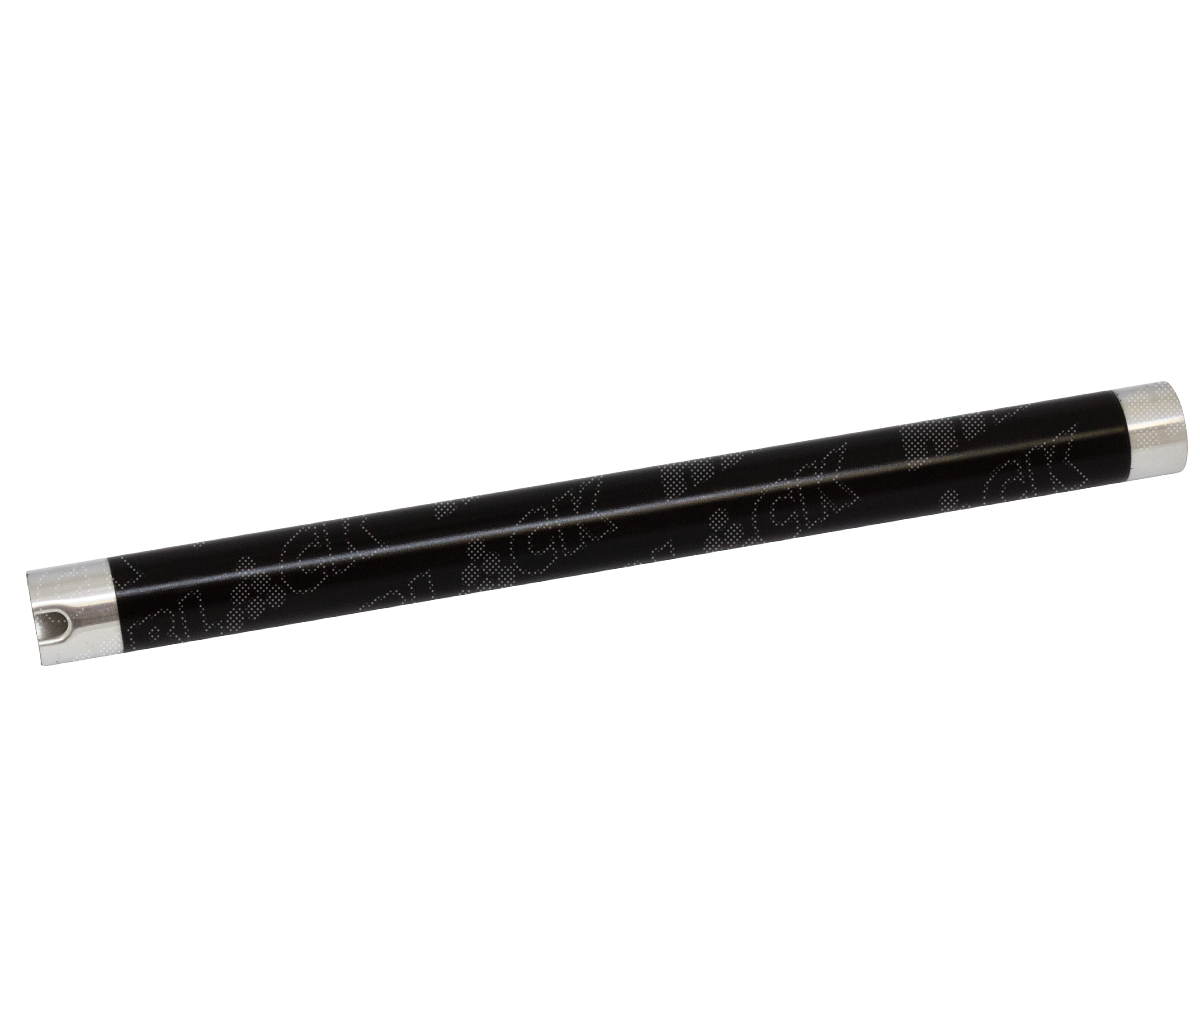 Вал тефлоновый верхний Hi-Black для SamsungML-2160/2165/SCX-3400/3405/SL-M2020/2070